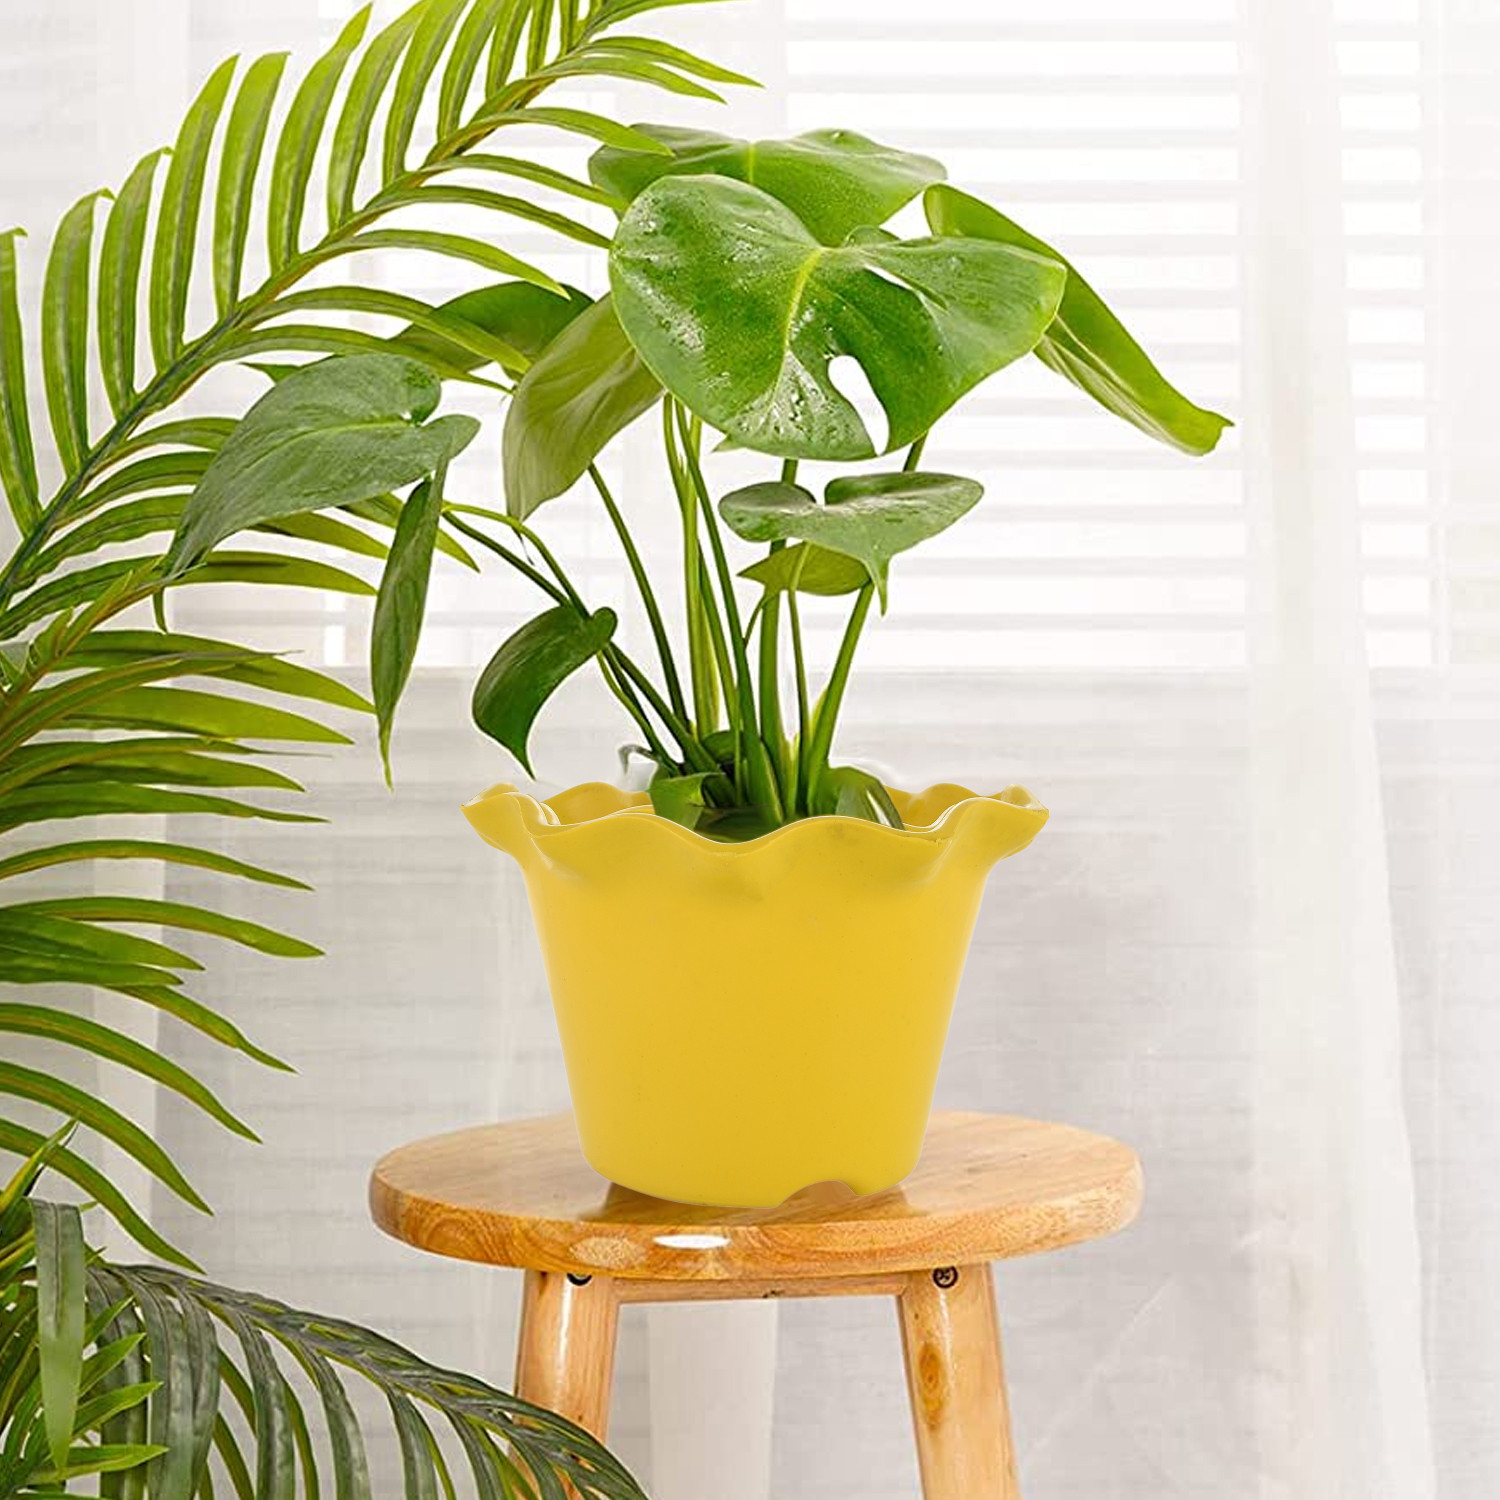 Kuber Industries Blossom Flower Pot|Durable Plastic Flower Pots|Planters for Home Décor|Garden|Living Room|Balcony|Pack of 2 (White & Yellow)